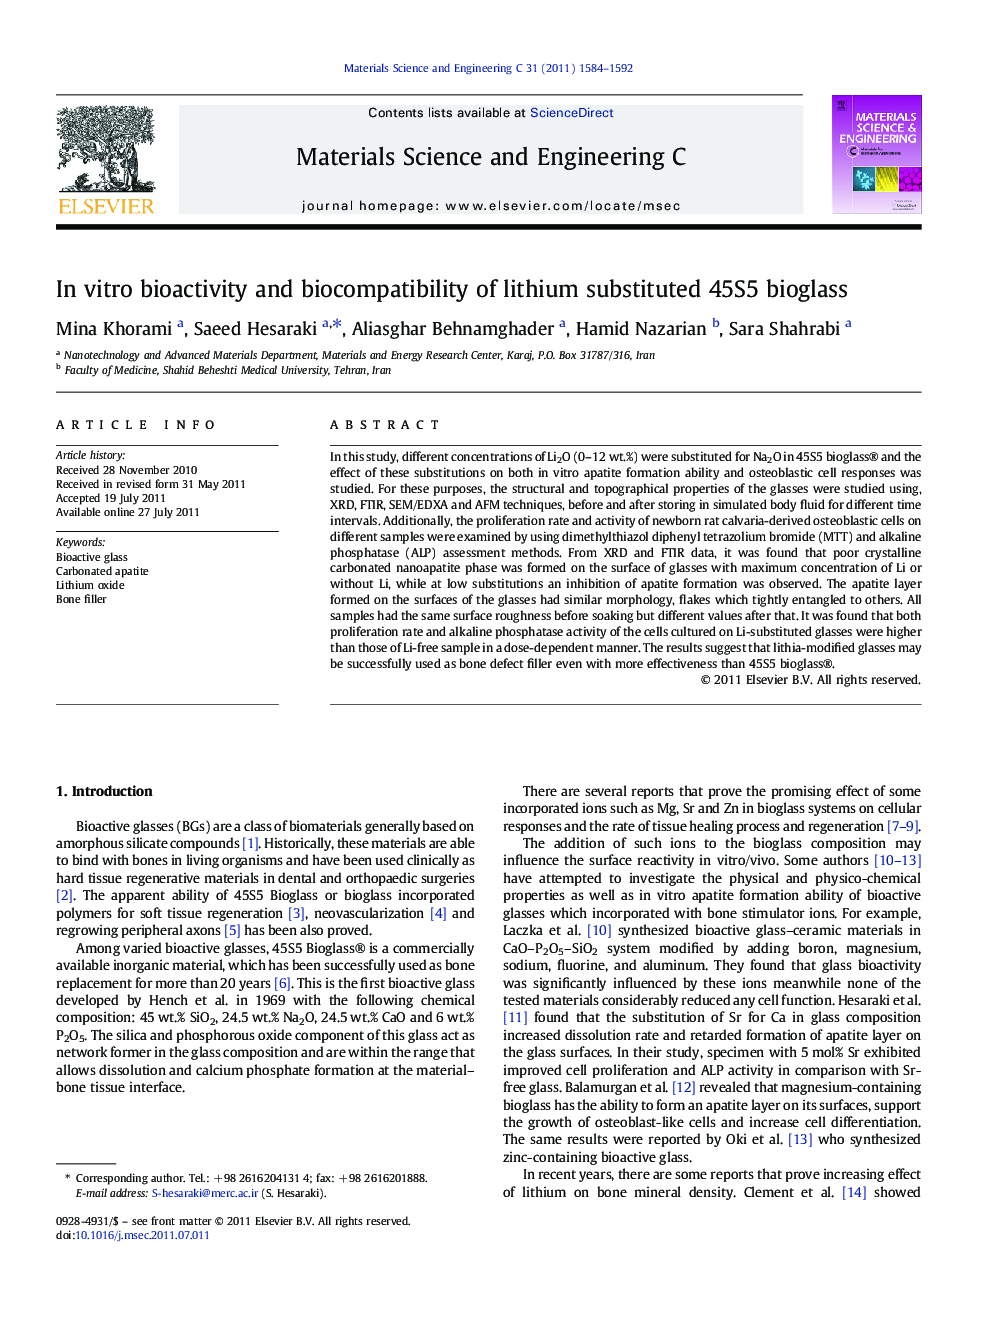 In vitro bioactivity and biocompatibility of lithium substituted 45S5 bioglass